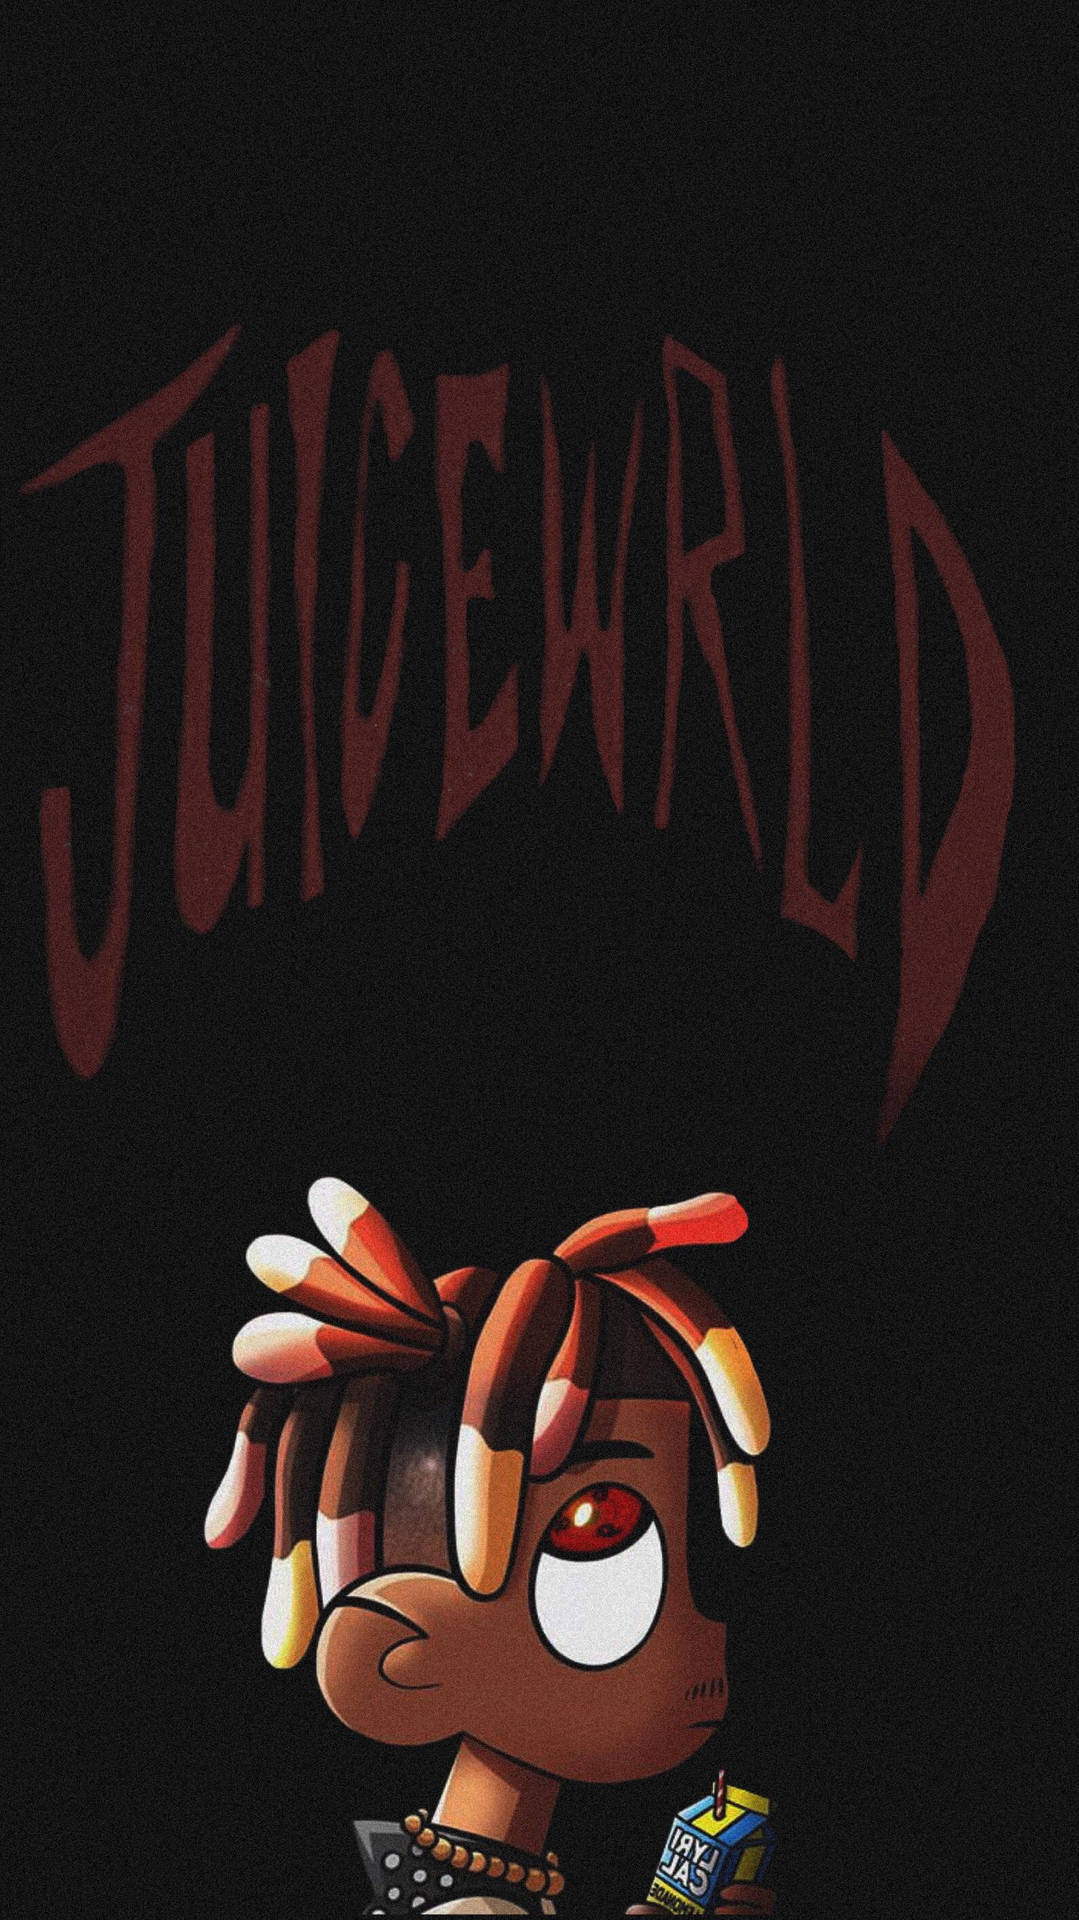 Animated Juice Wrld Cartoon Wallpaper